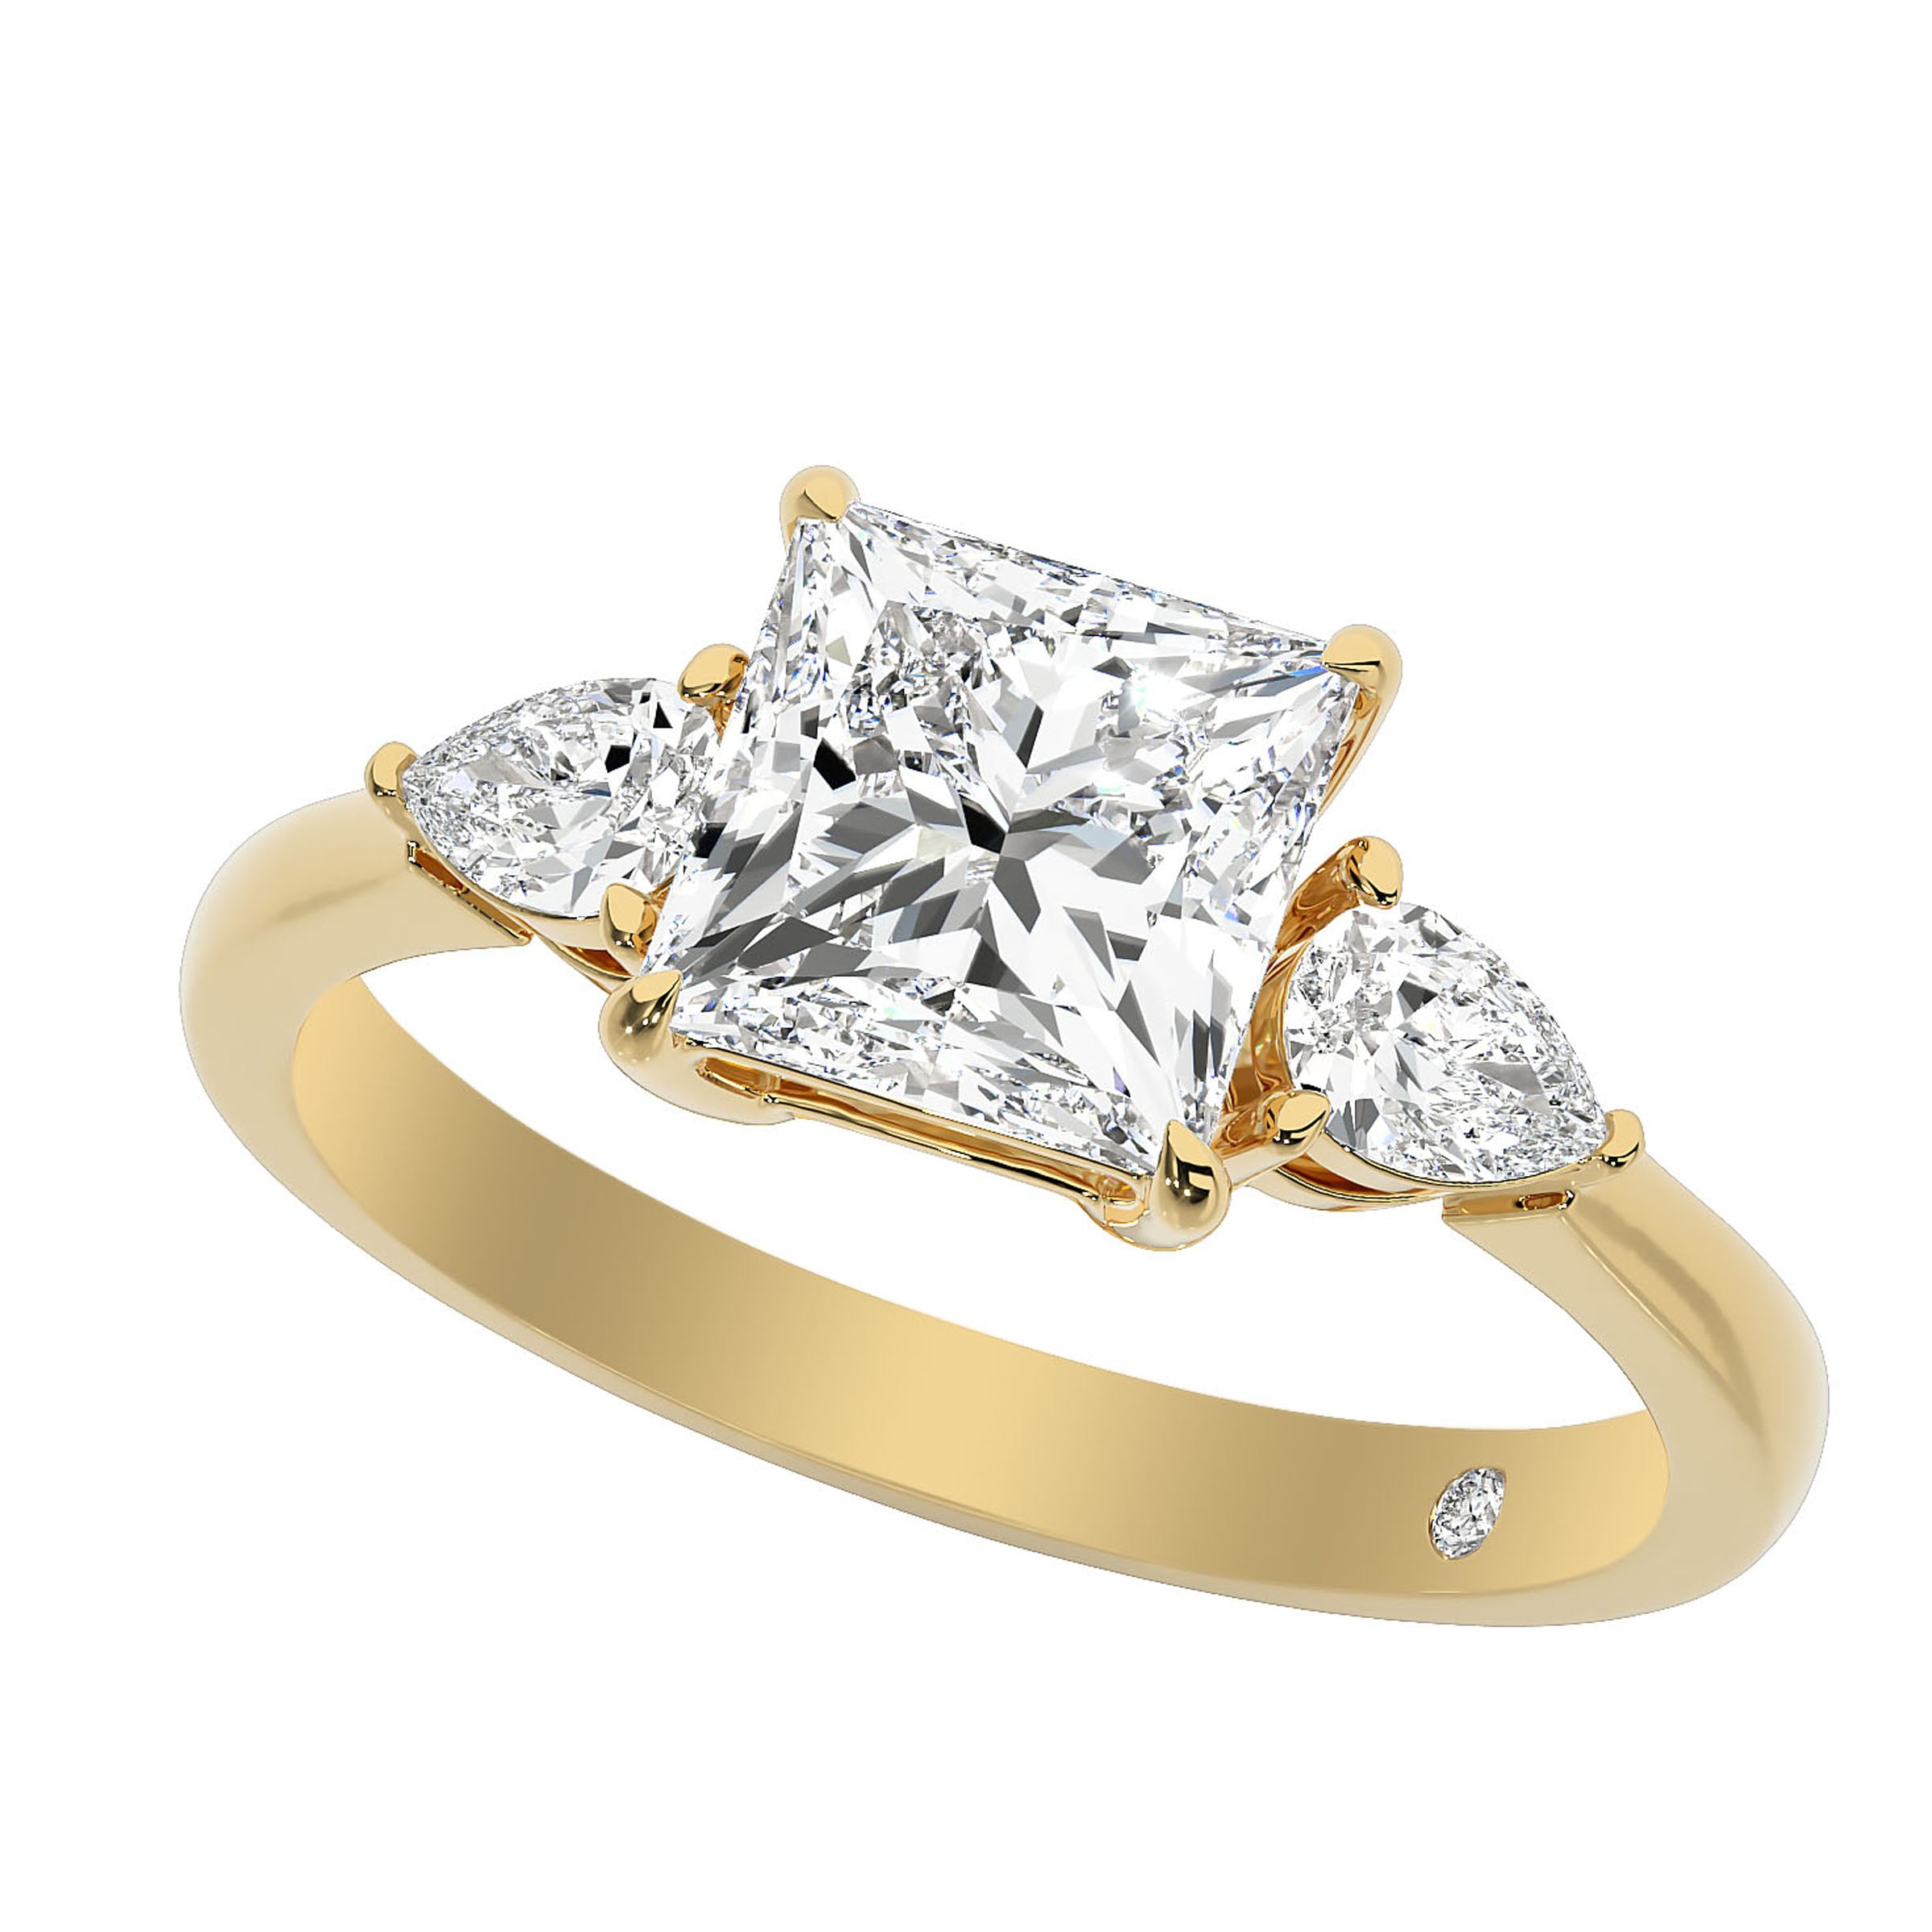 Michelle Princess Engagement Ring